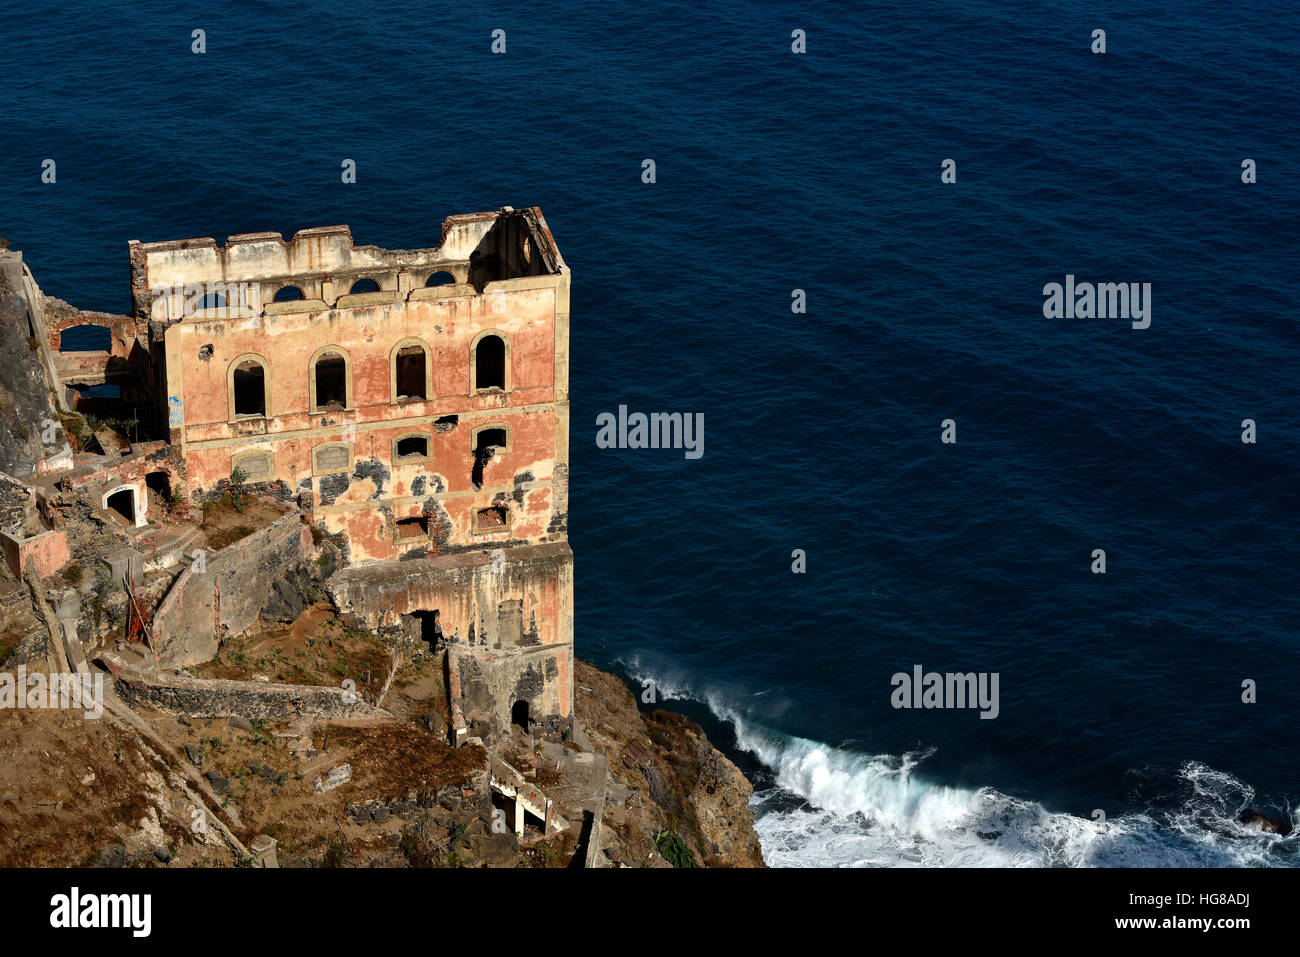 Casa Hamilton Ruinen, ruiniert Wasseraufbereitungsanlage, Teneriffa, Kanarische Inseln, Spanien Stockfoto